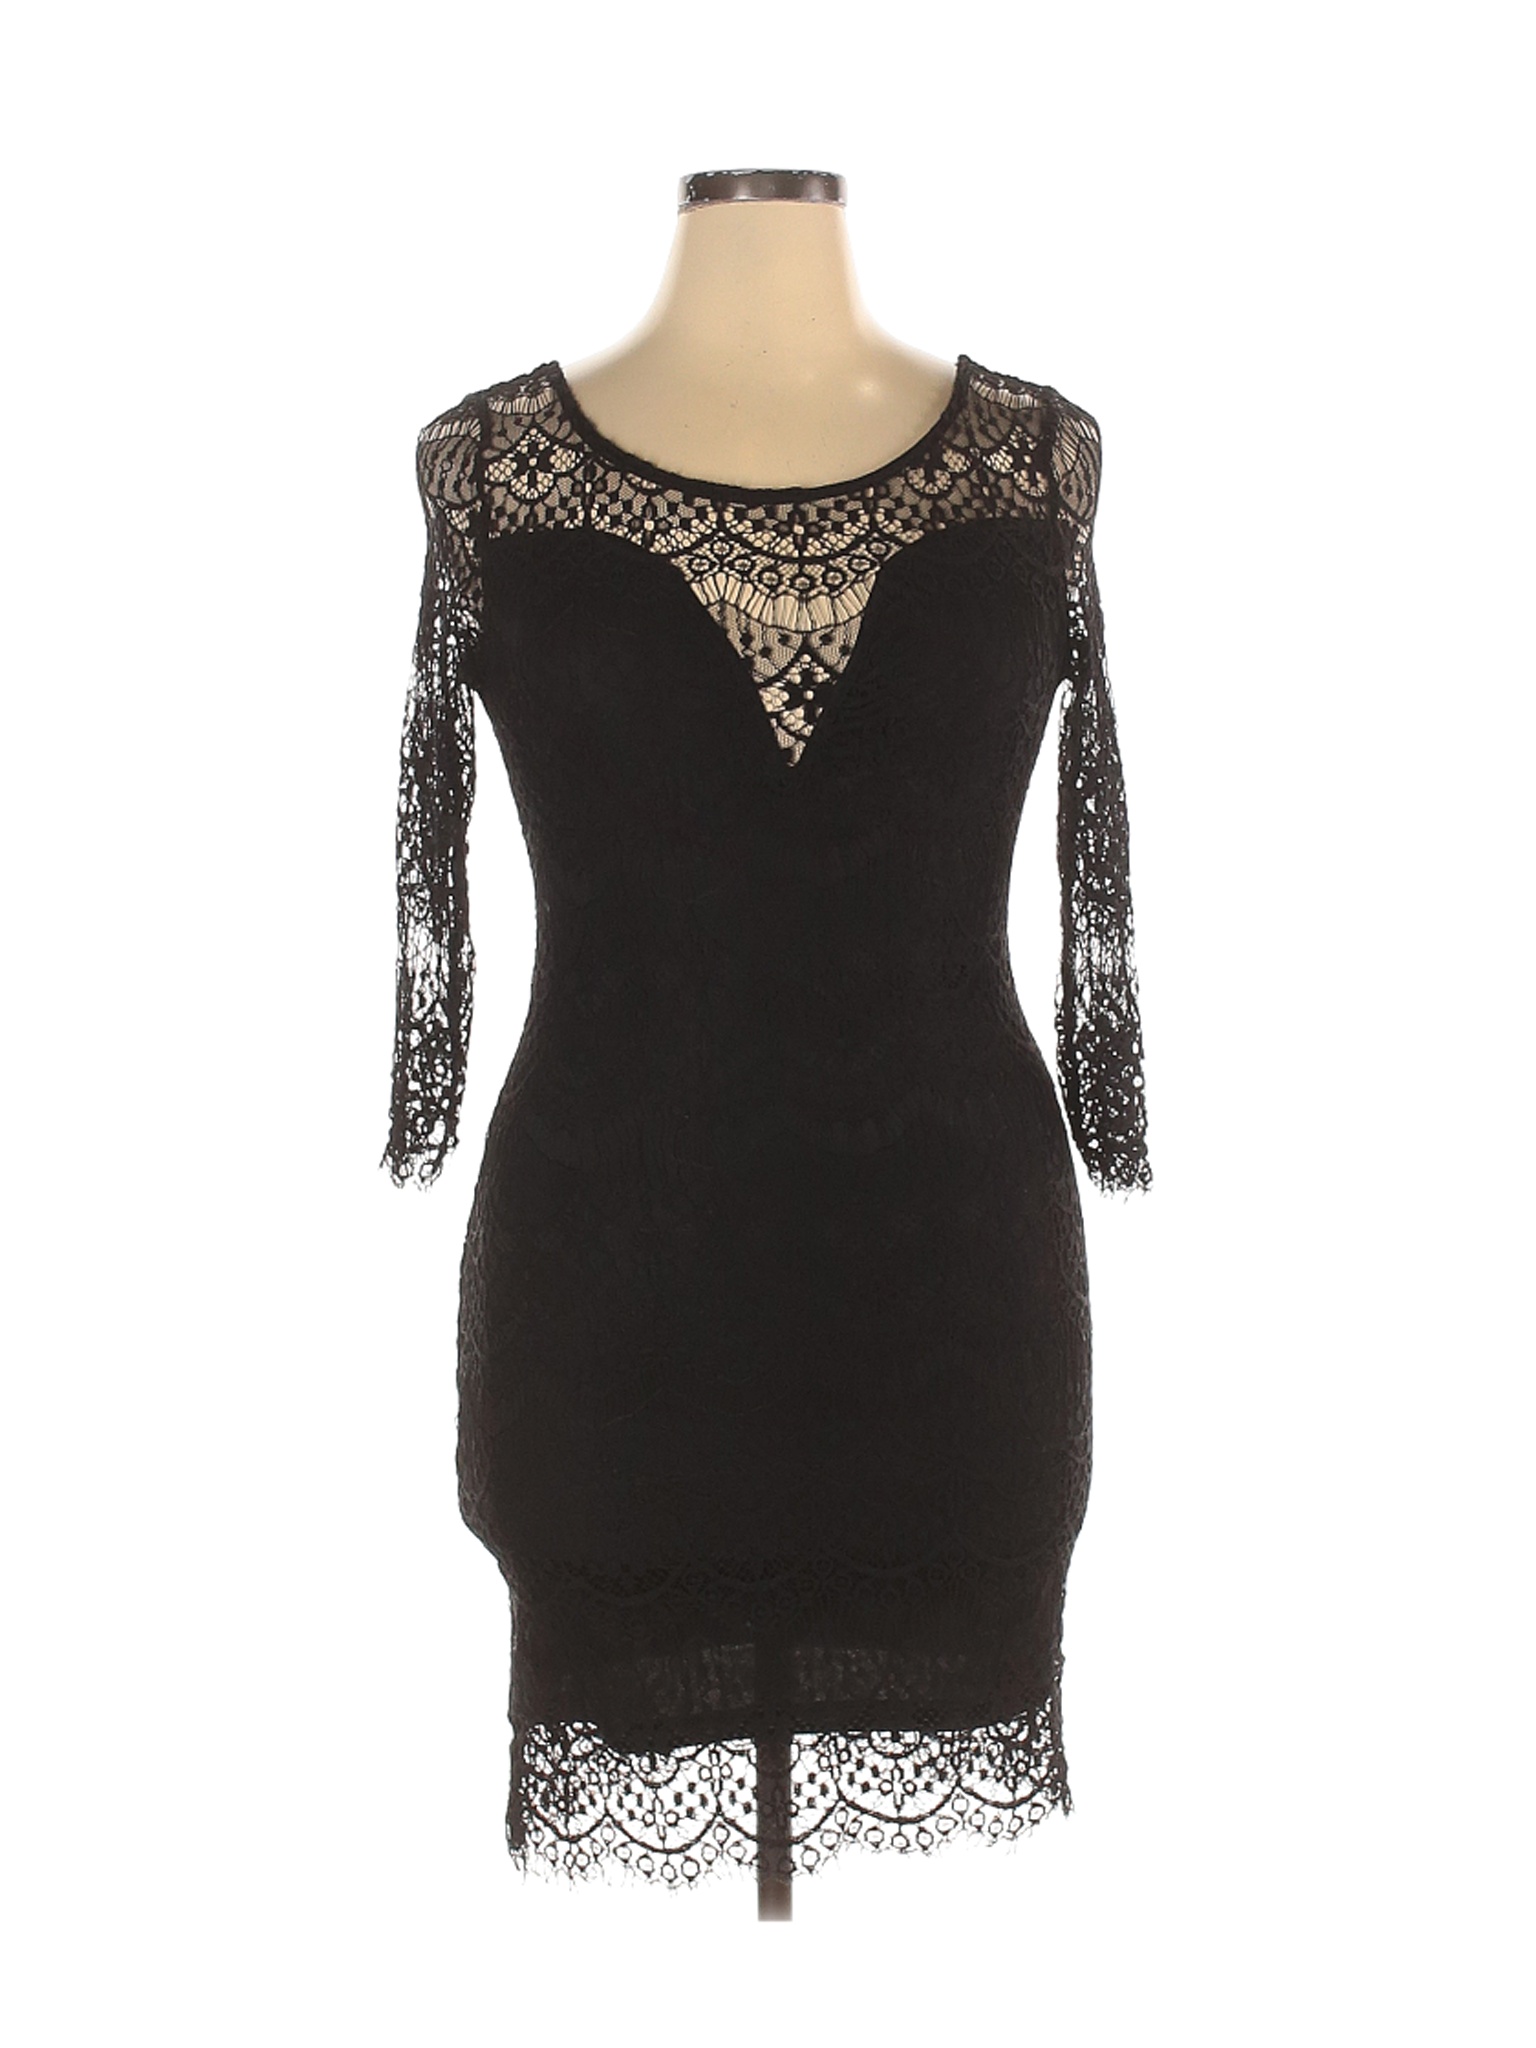 Charlotte Russe Women Black Cocktail Dress XL | eBay